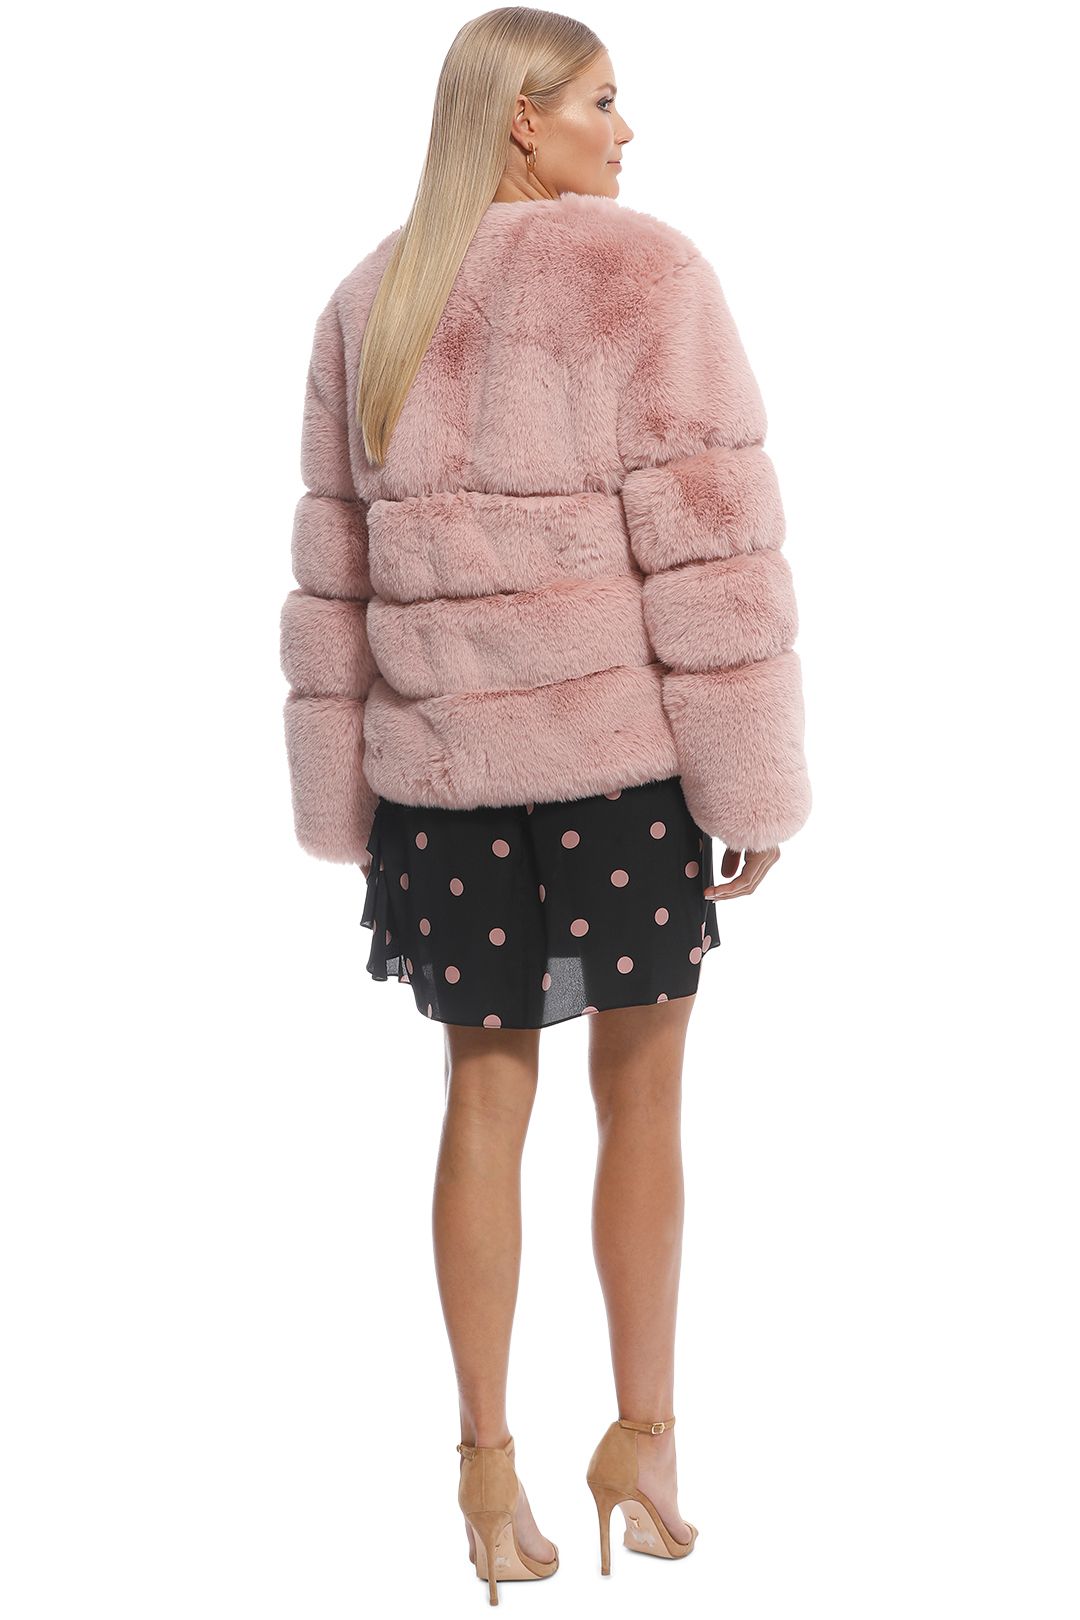 Keepsake the Label - Gleam Fur Coat - Dusty Pink - Back